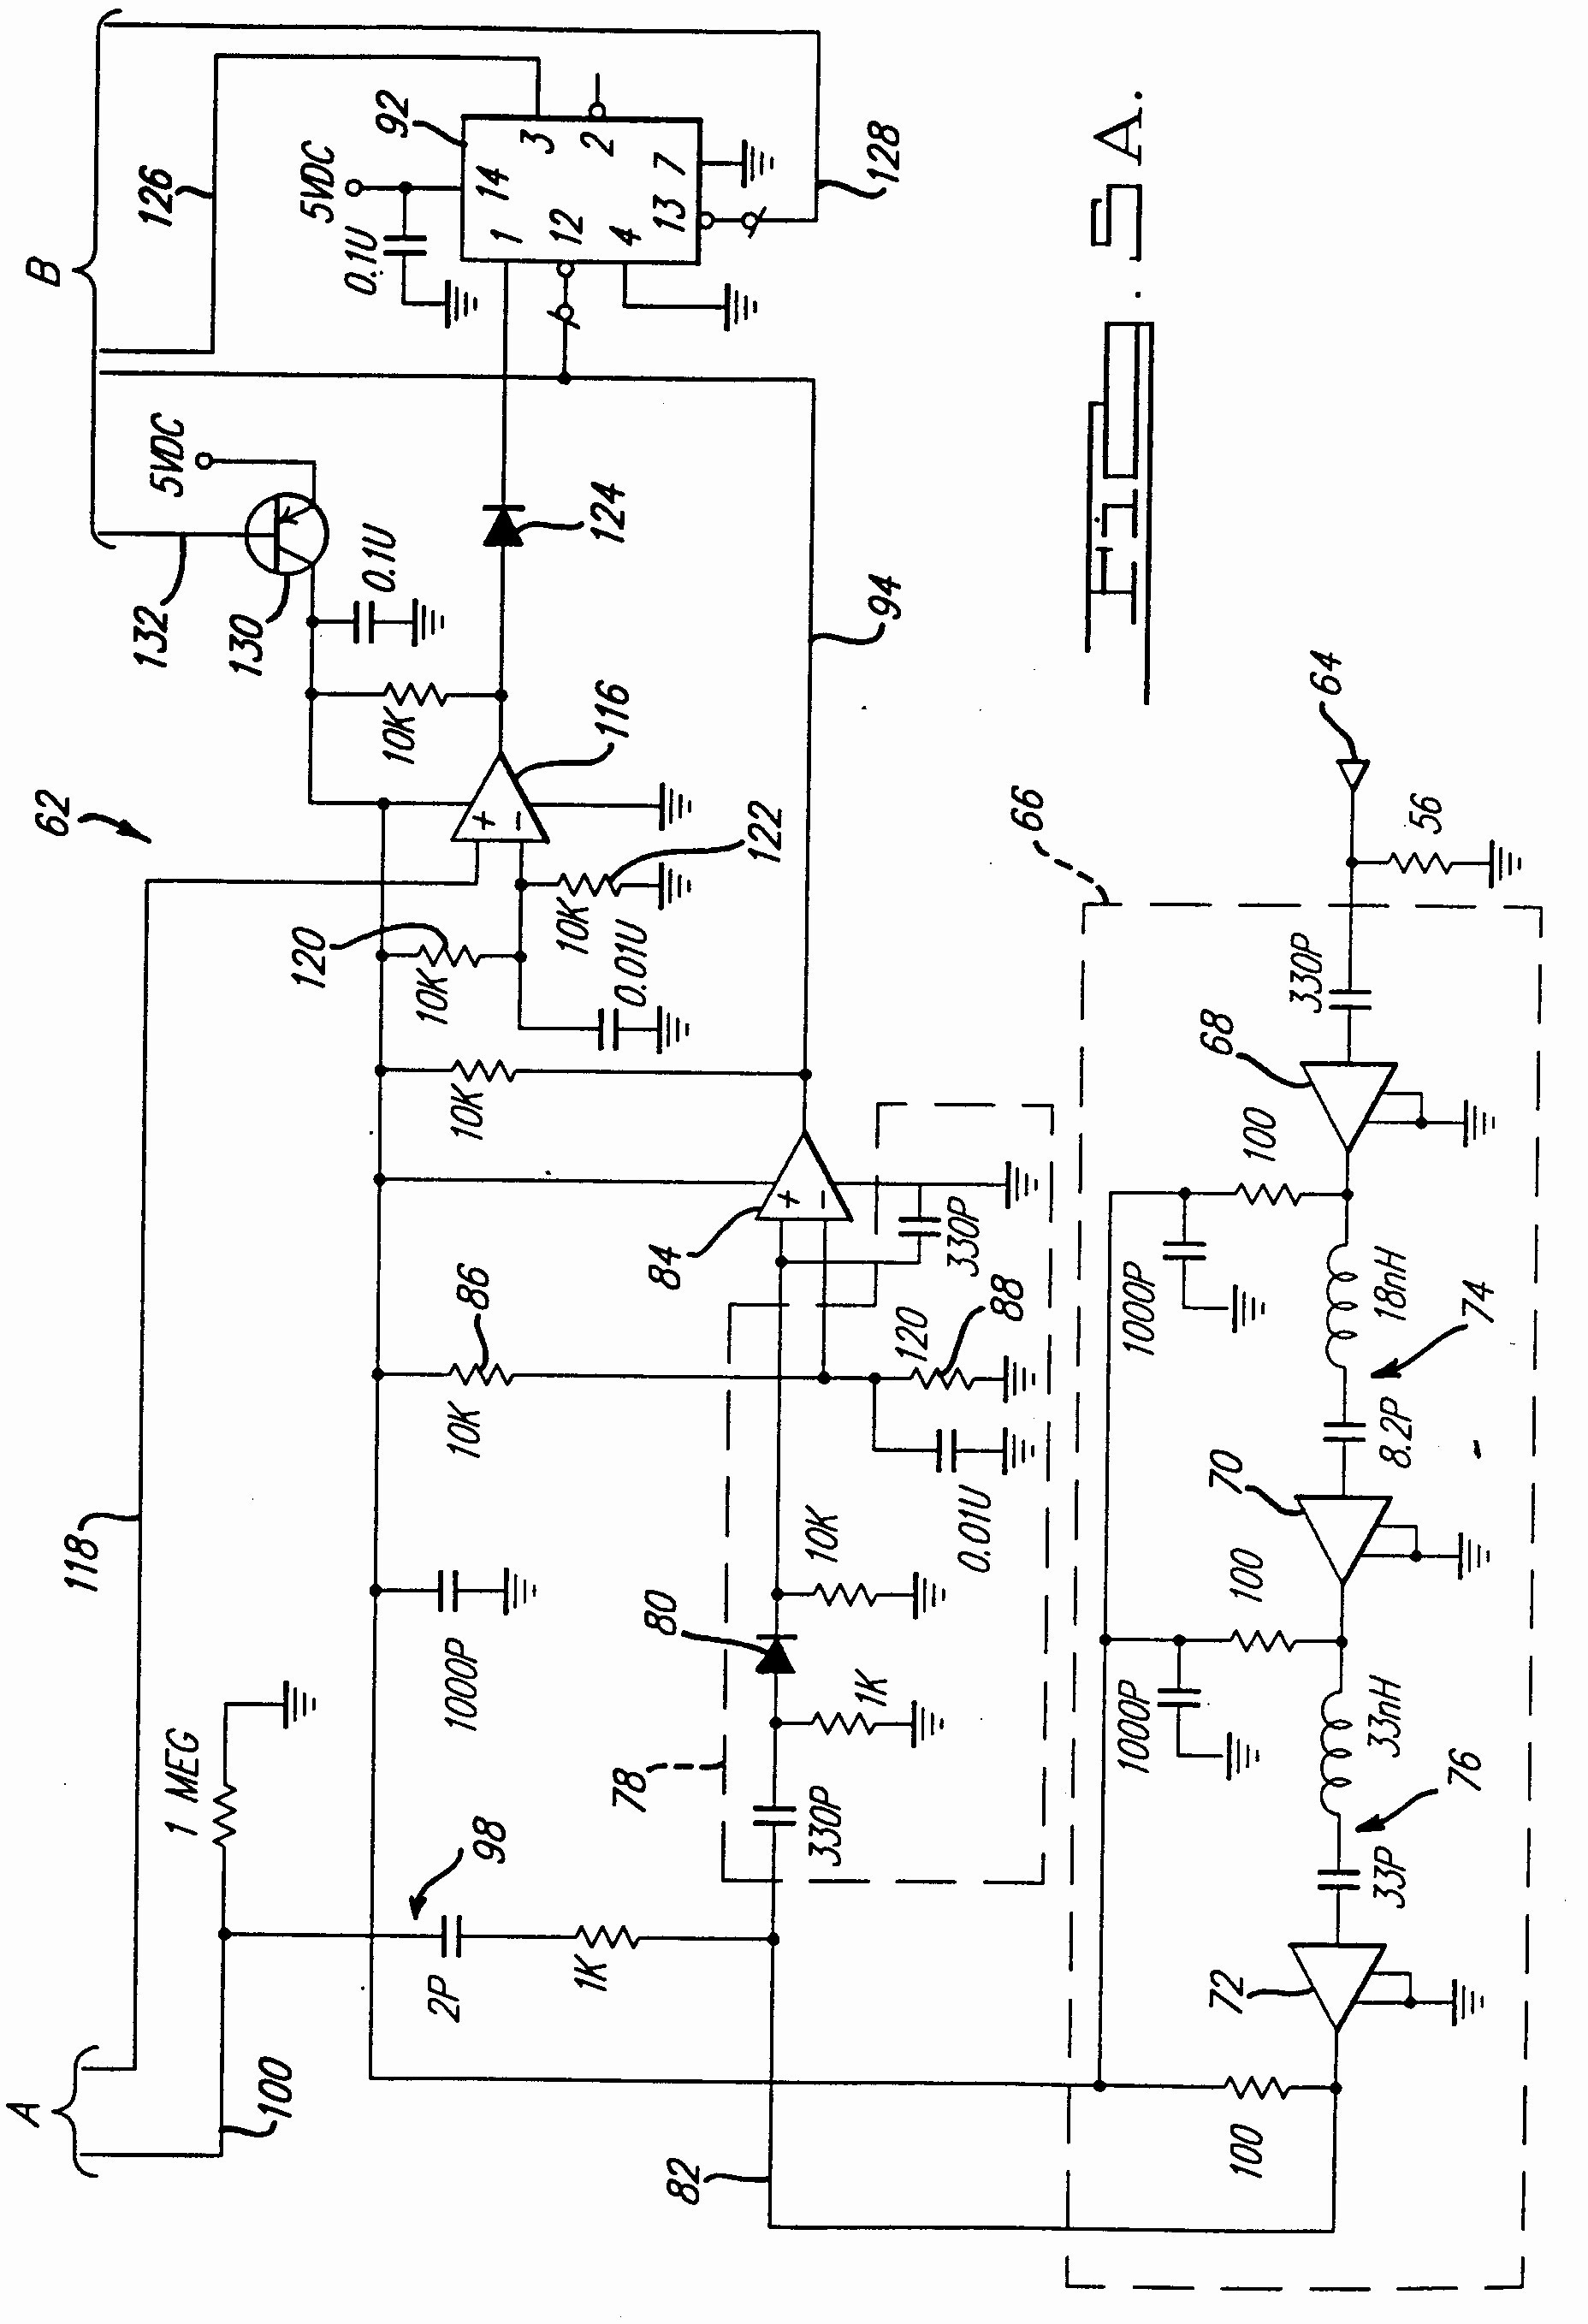 Wiring Diagram for Garage Valid Wiring Diagram for Liftmaster Garage Door Opener Free Downloads